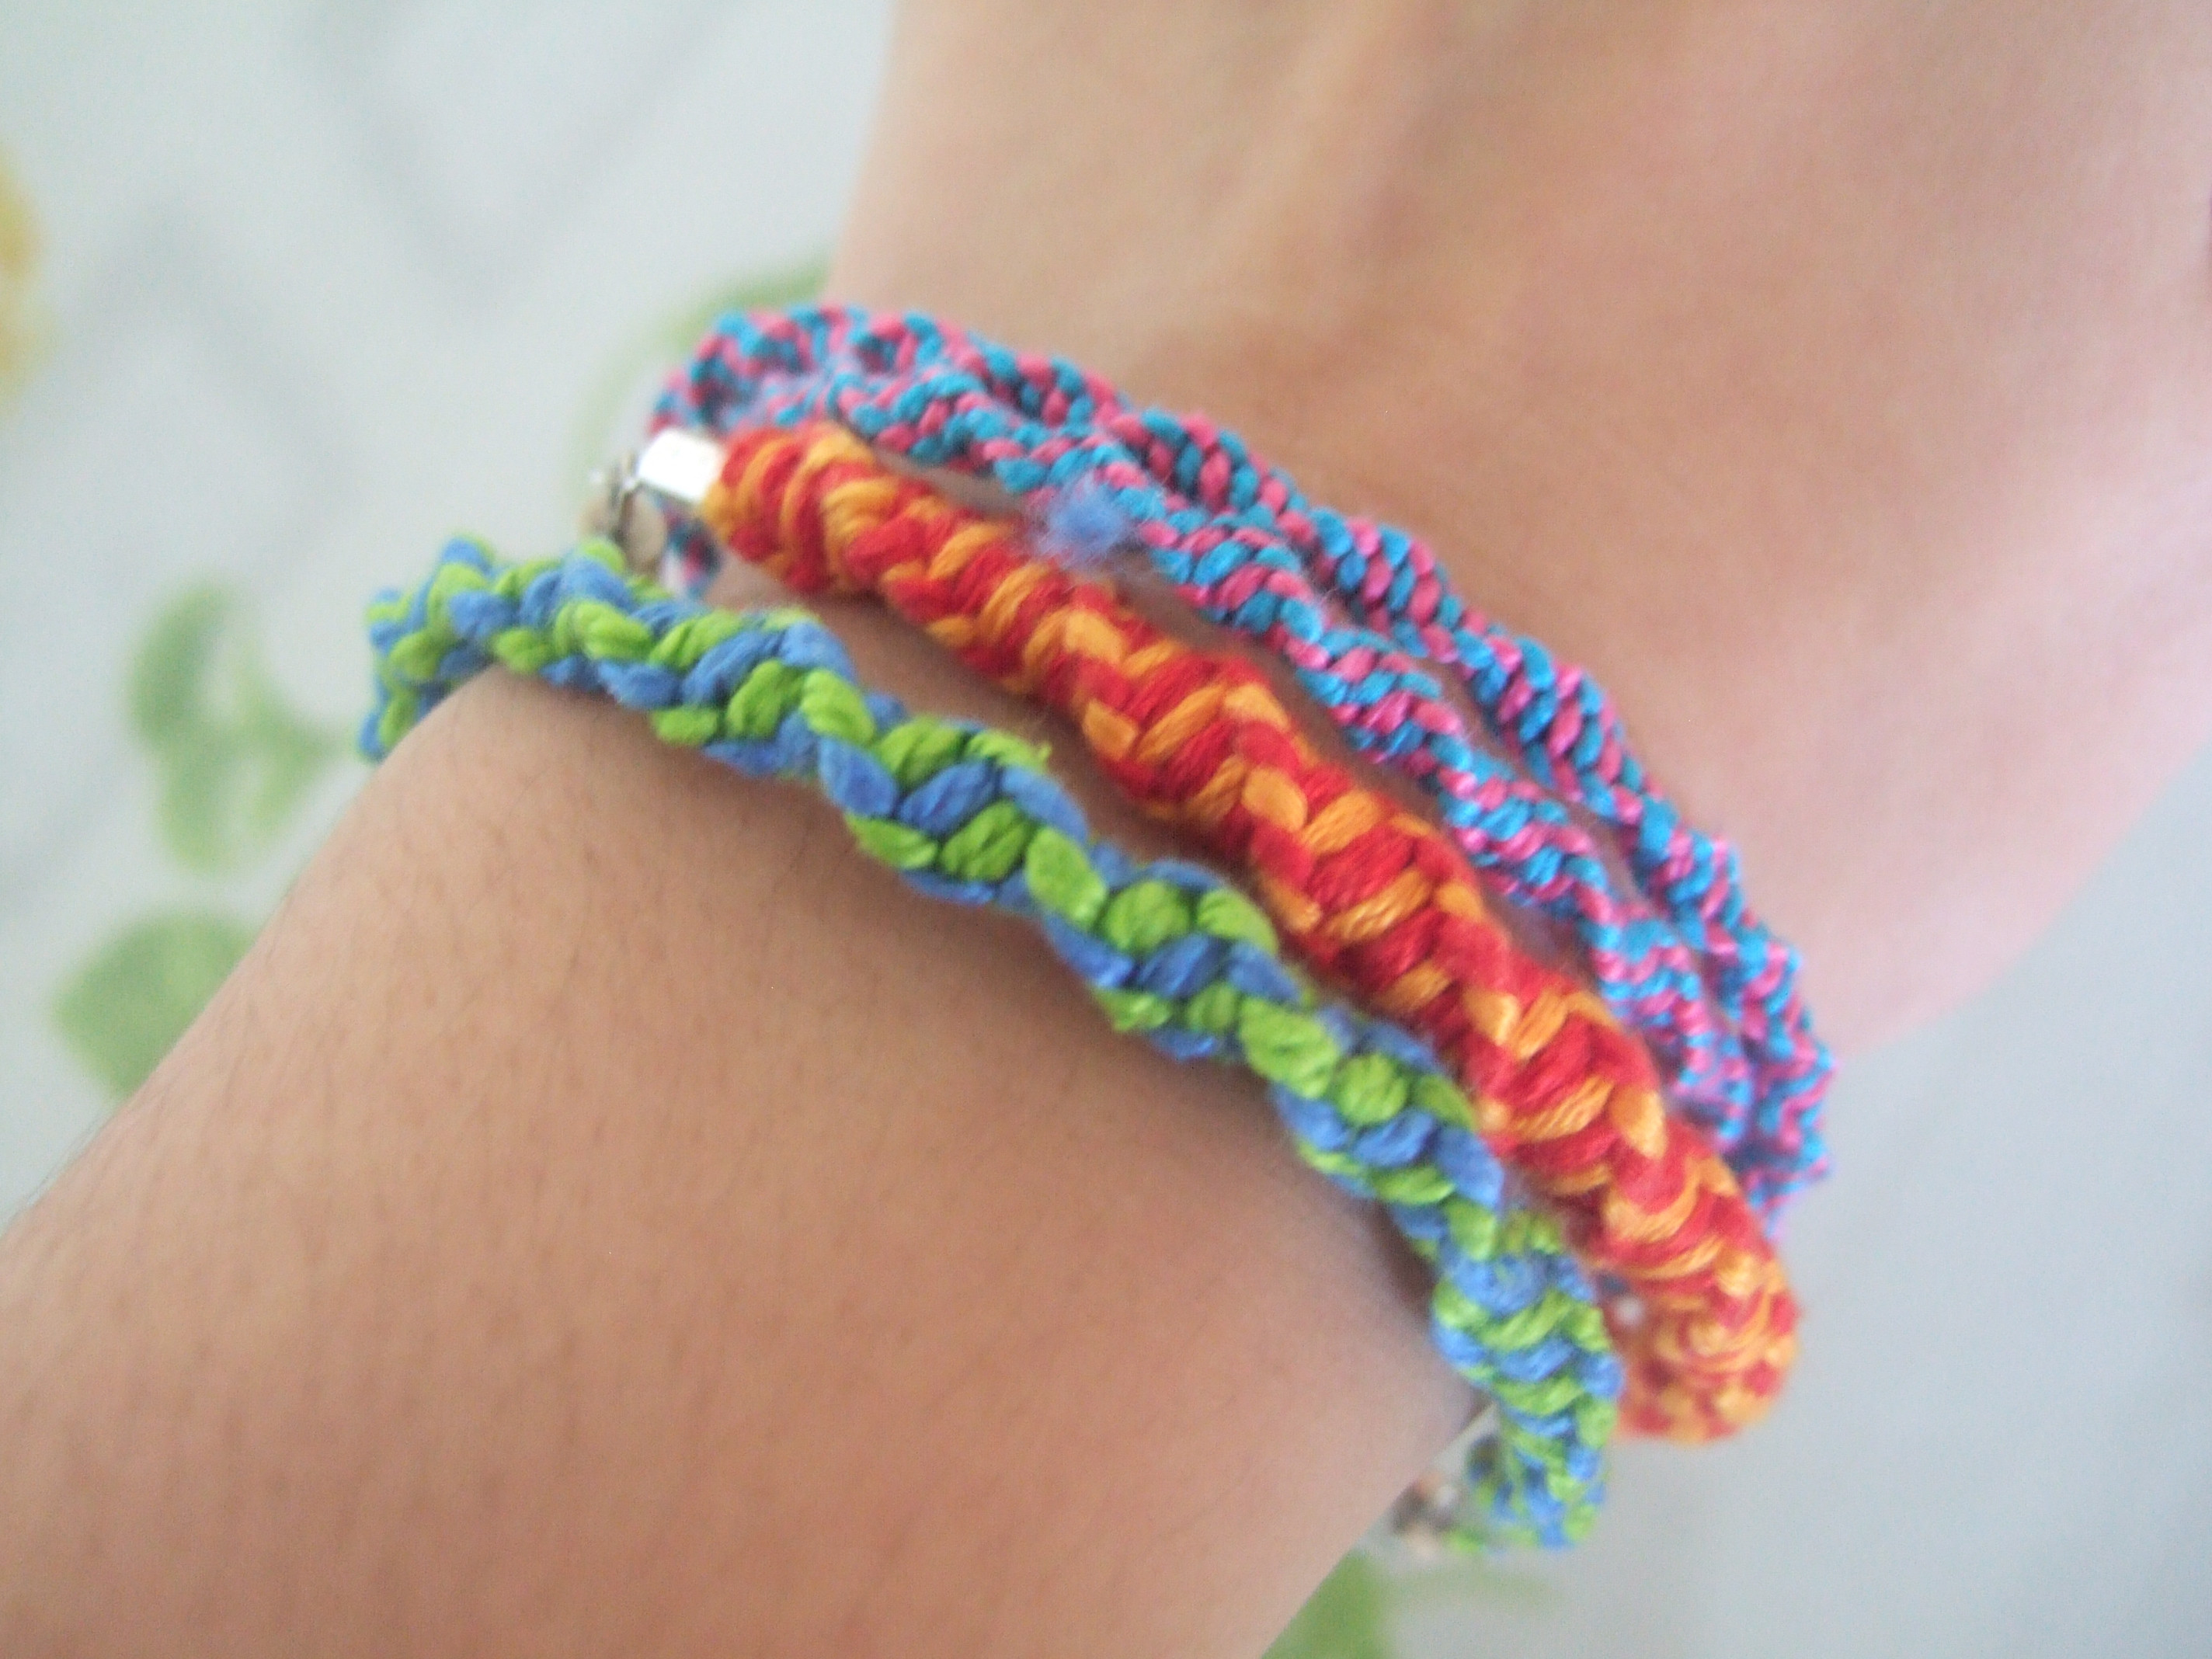 Best ideas about DIY Friendship Bracelets
. Save or Pin DIY Friendship Bracelet Now.